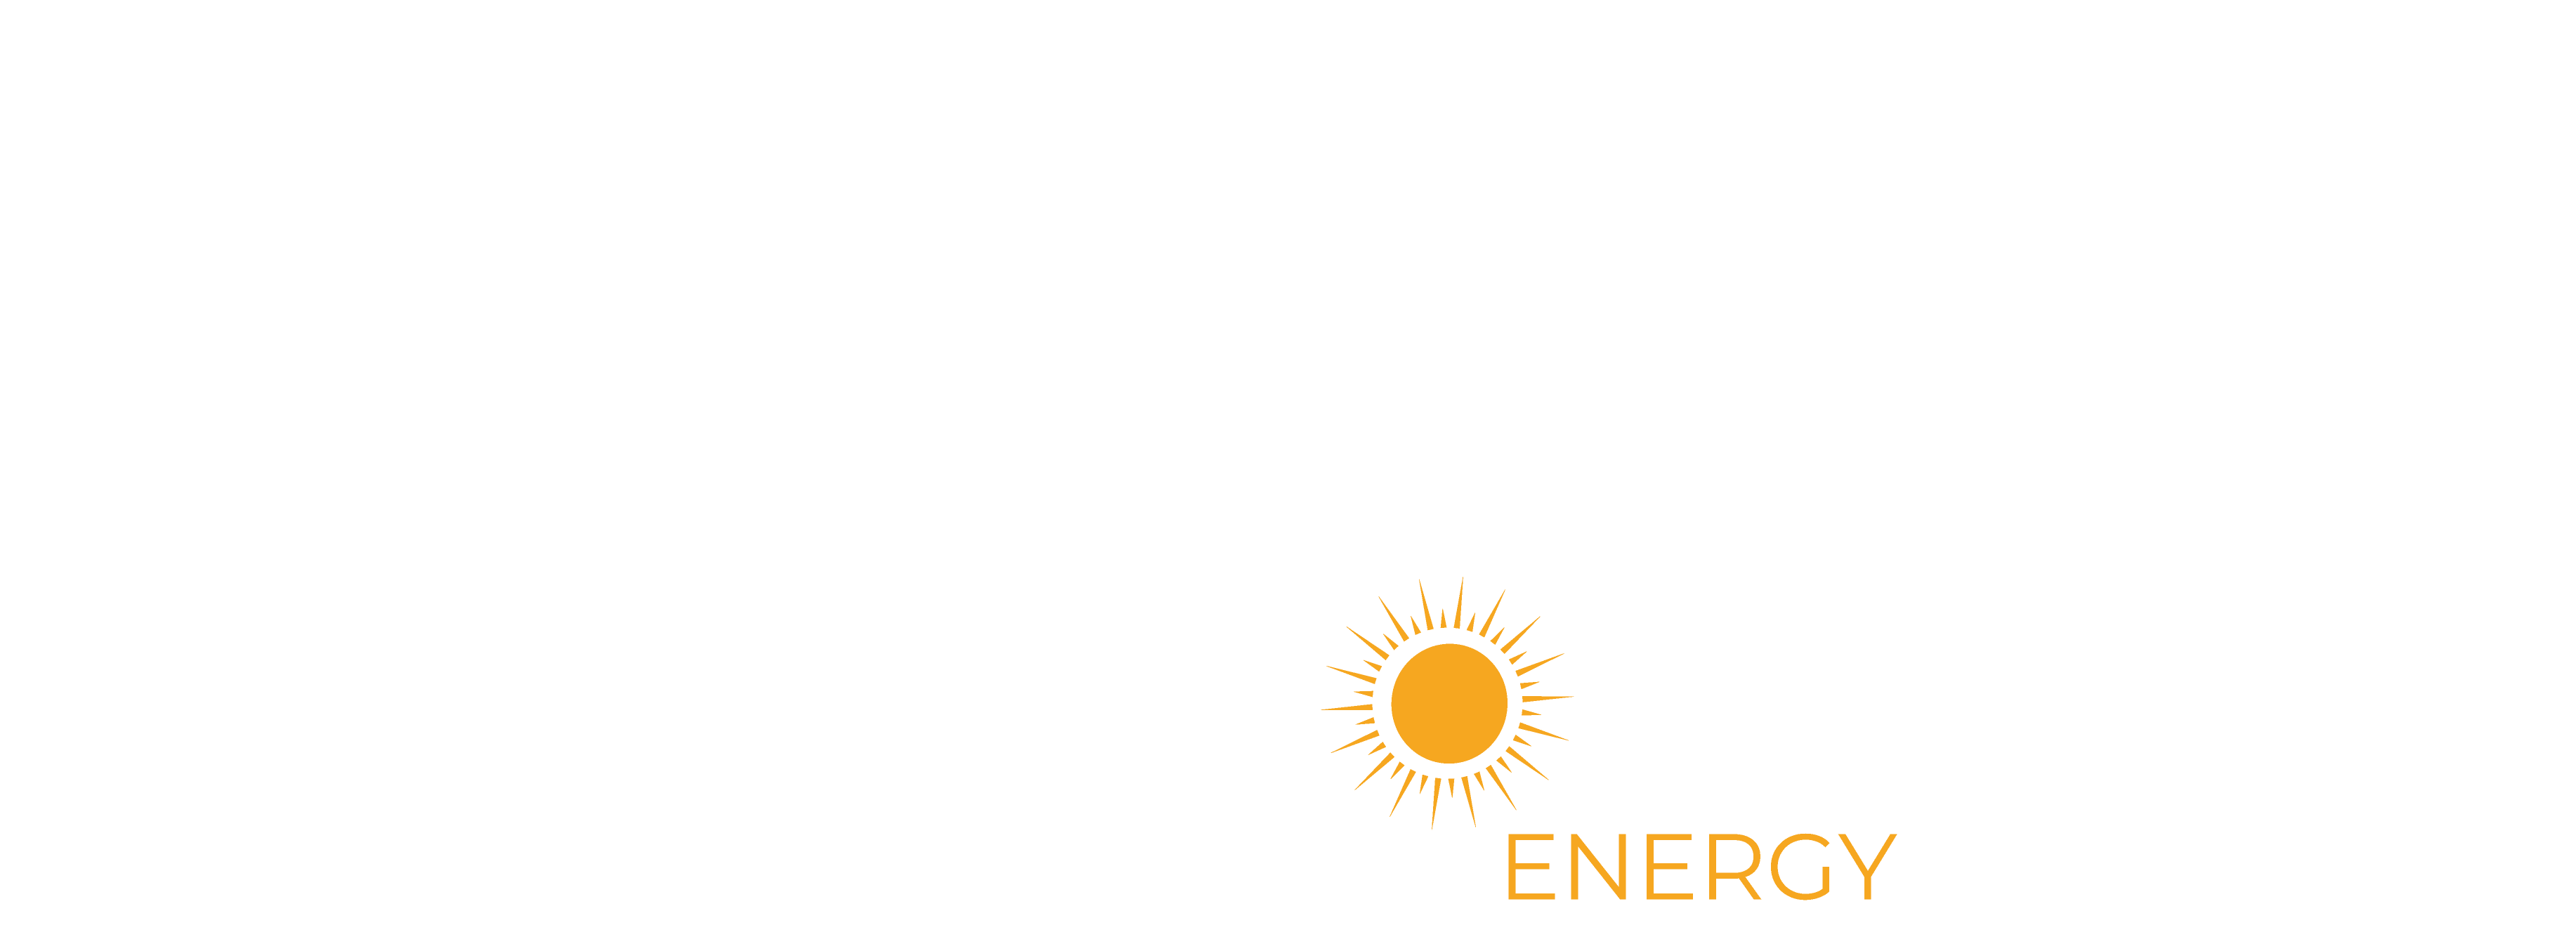 Photons energy icon